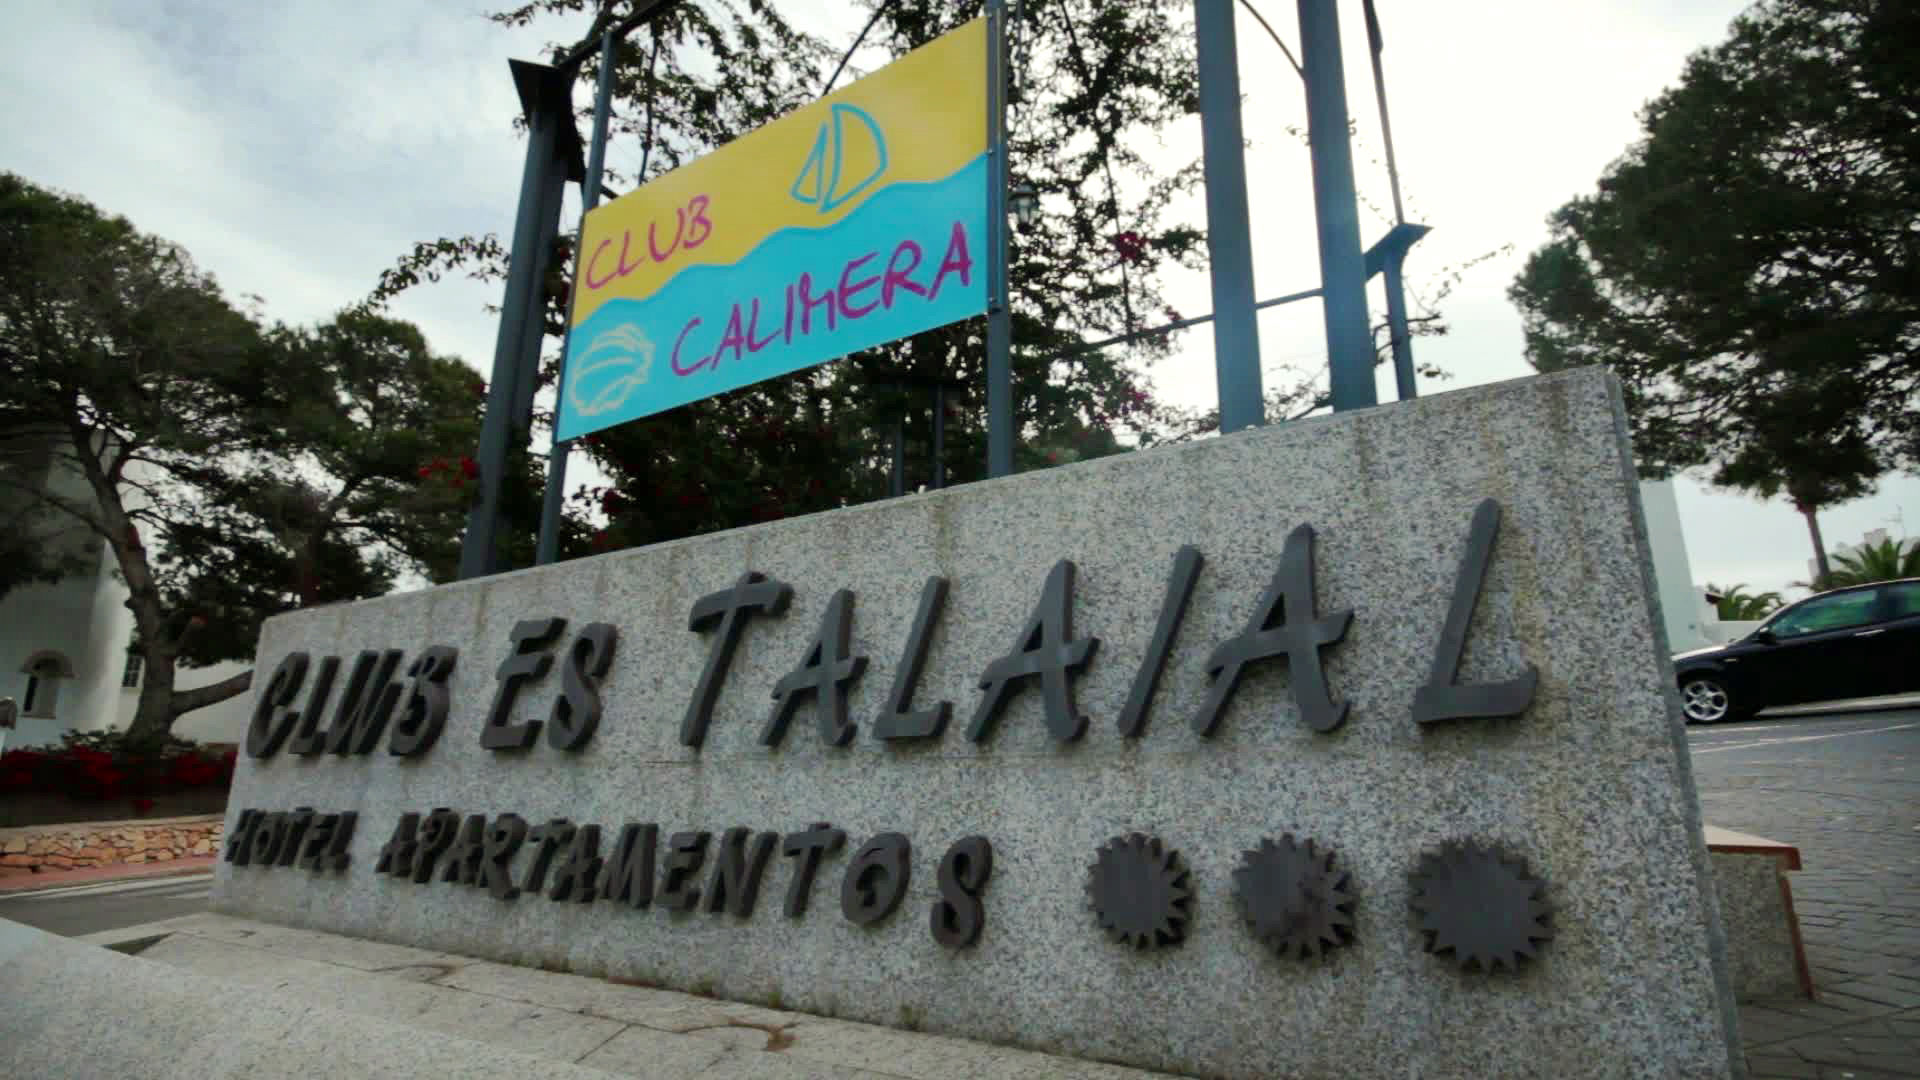 Club Calimera Es Talaial